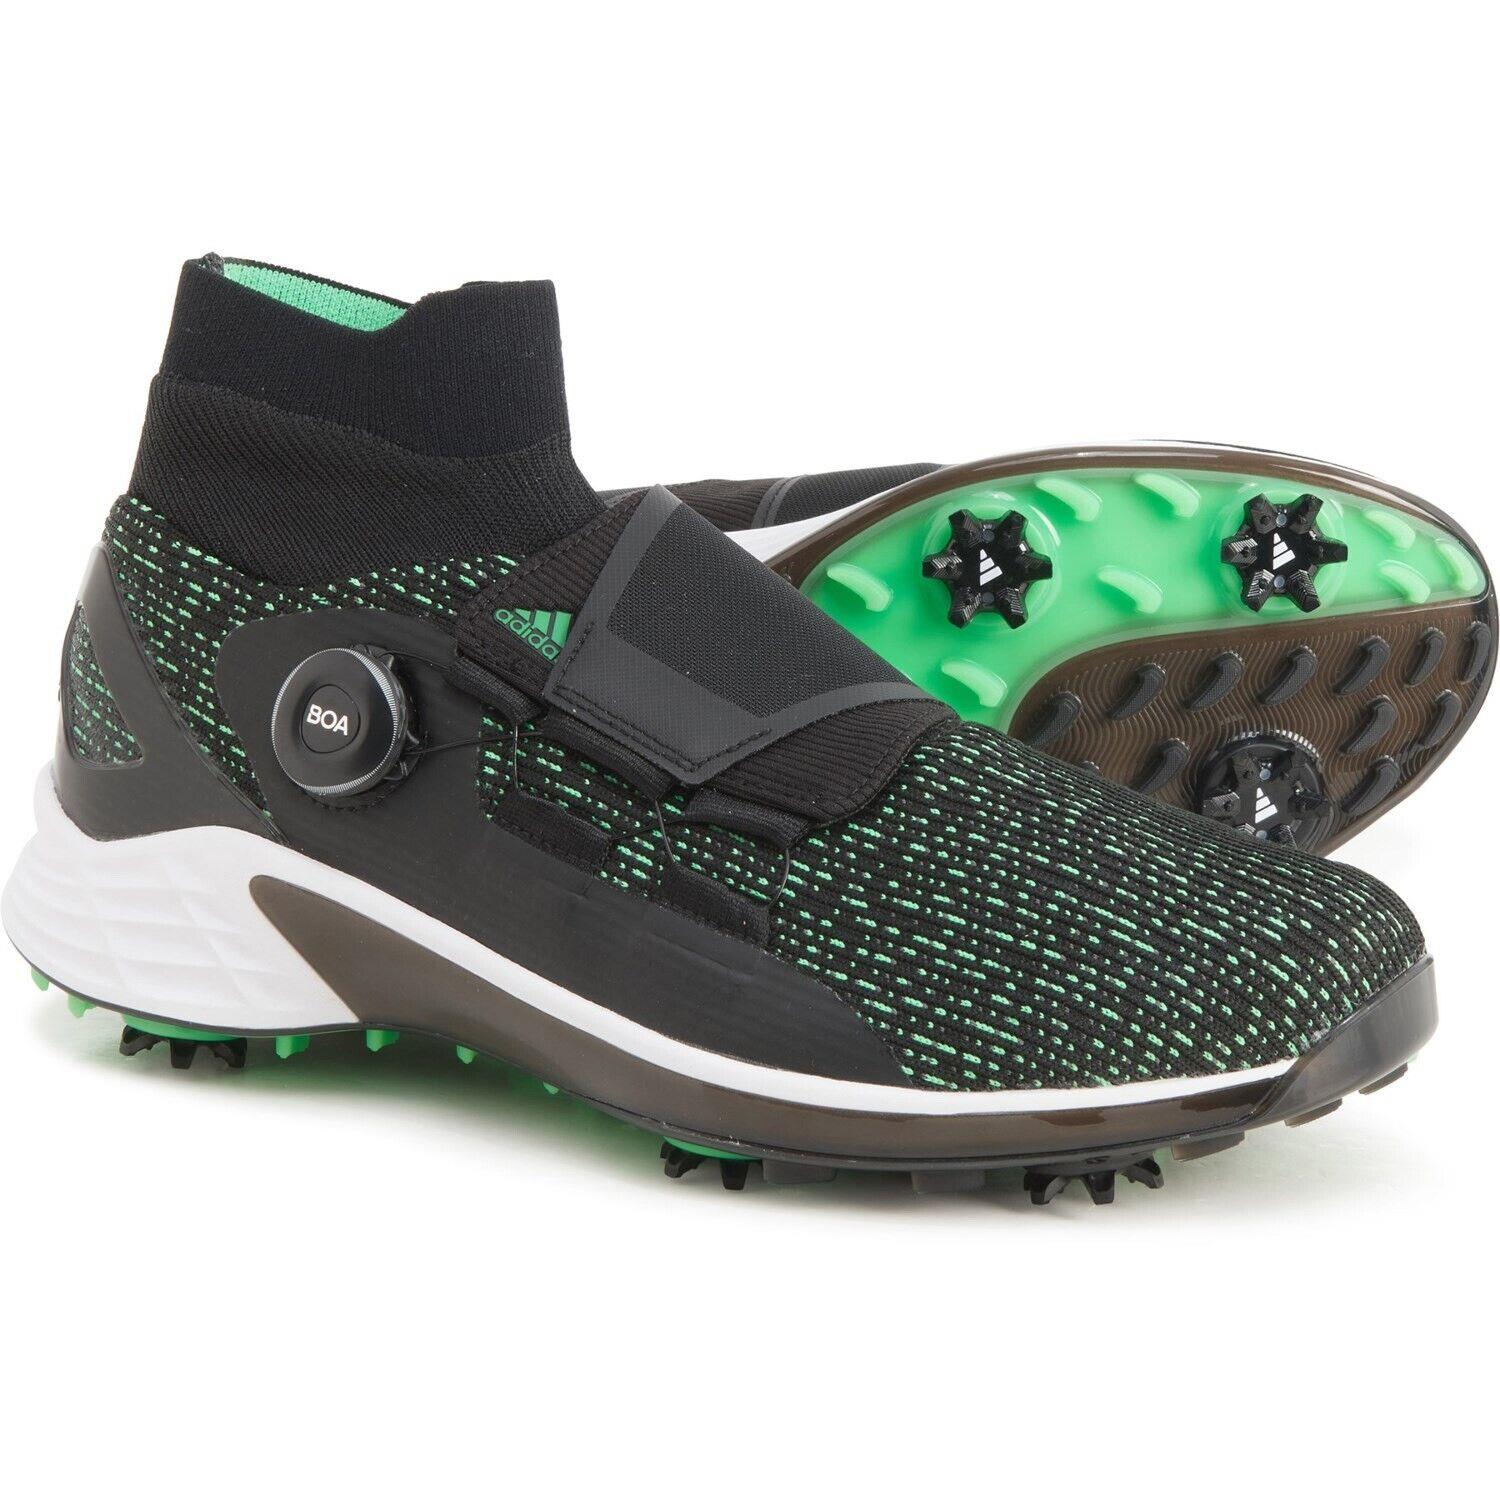 Adidas ZG21 Motion Boa Waterproof Golf Shoe Black Green Wht Boost 12 H68592